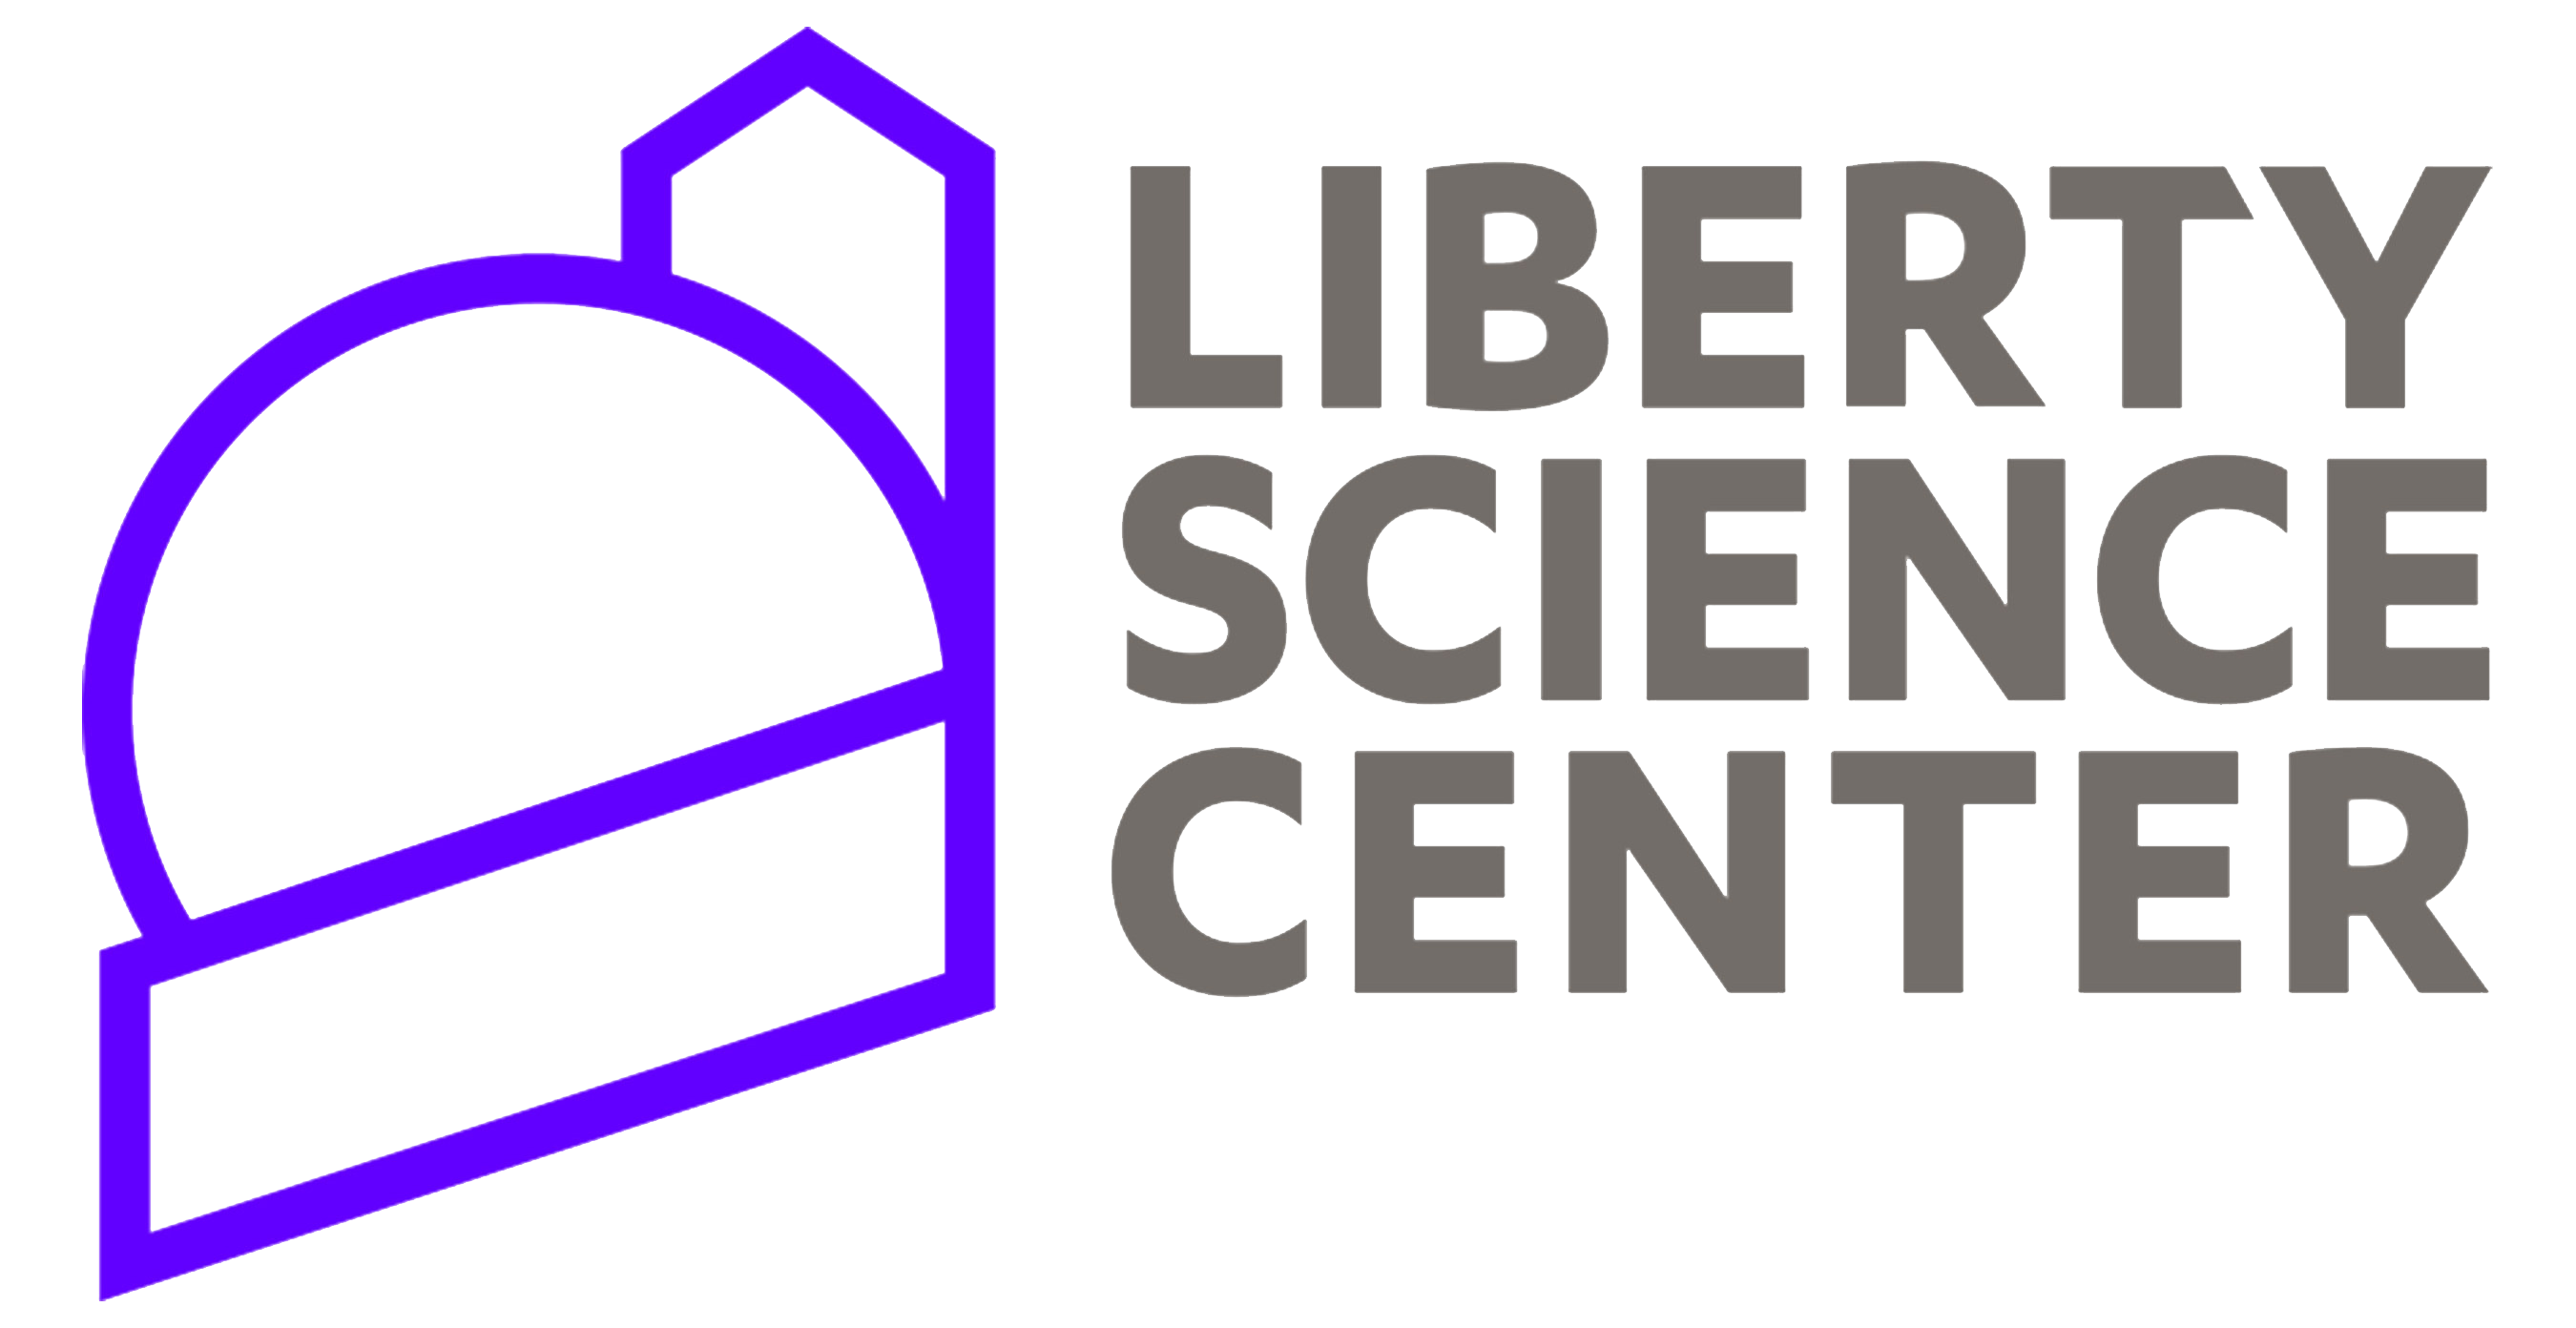 Liberty Science Center Logo